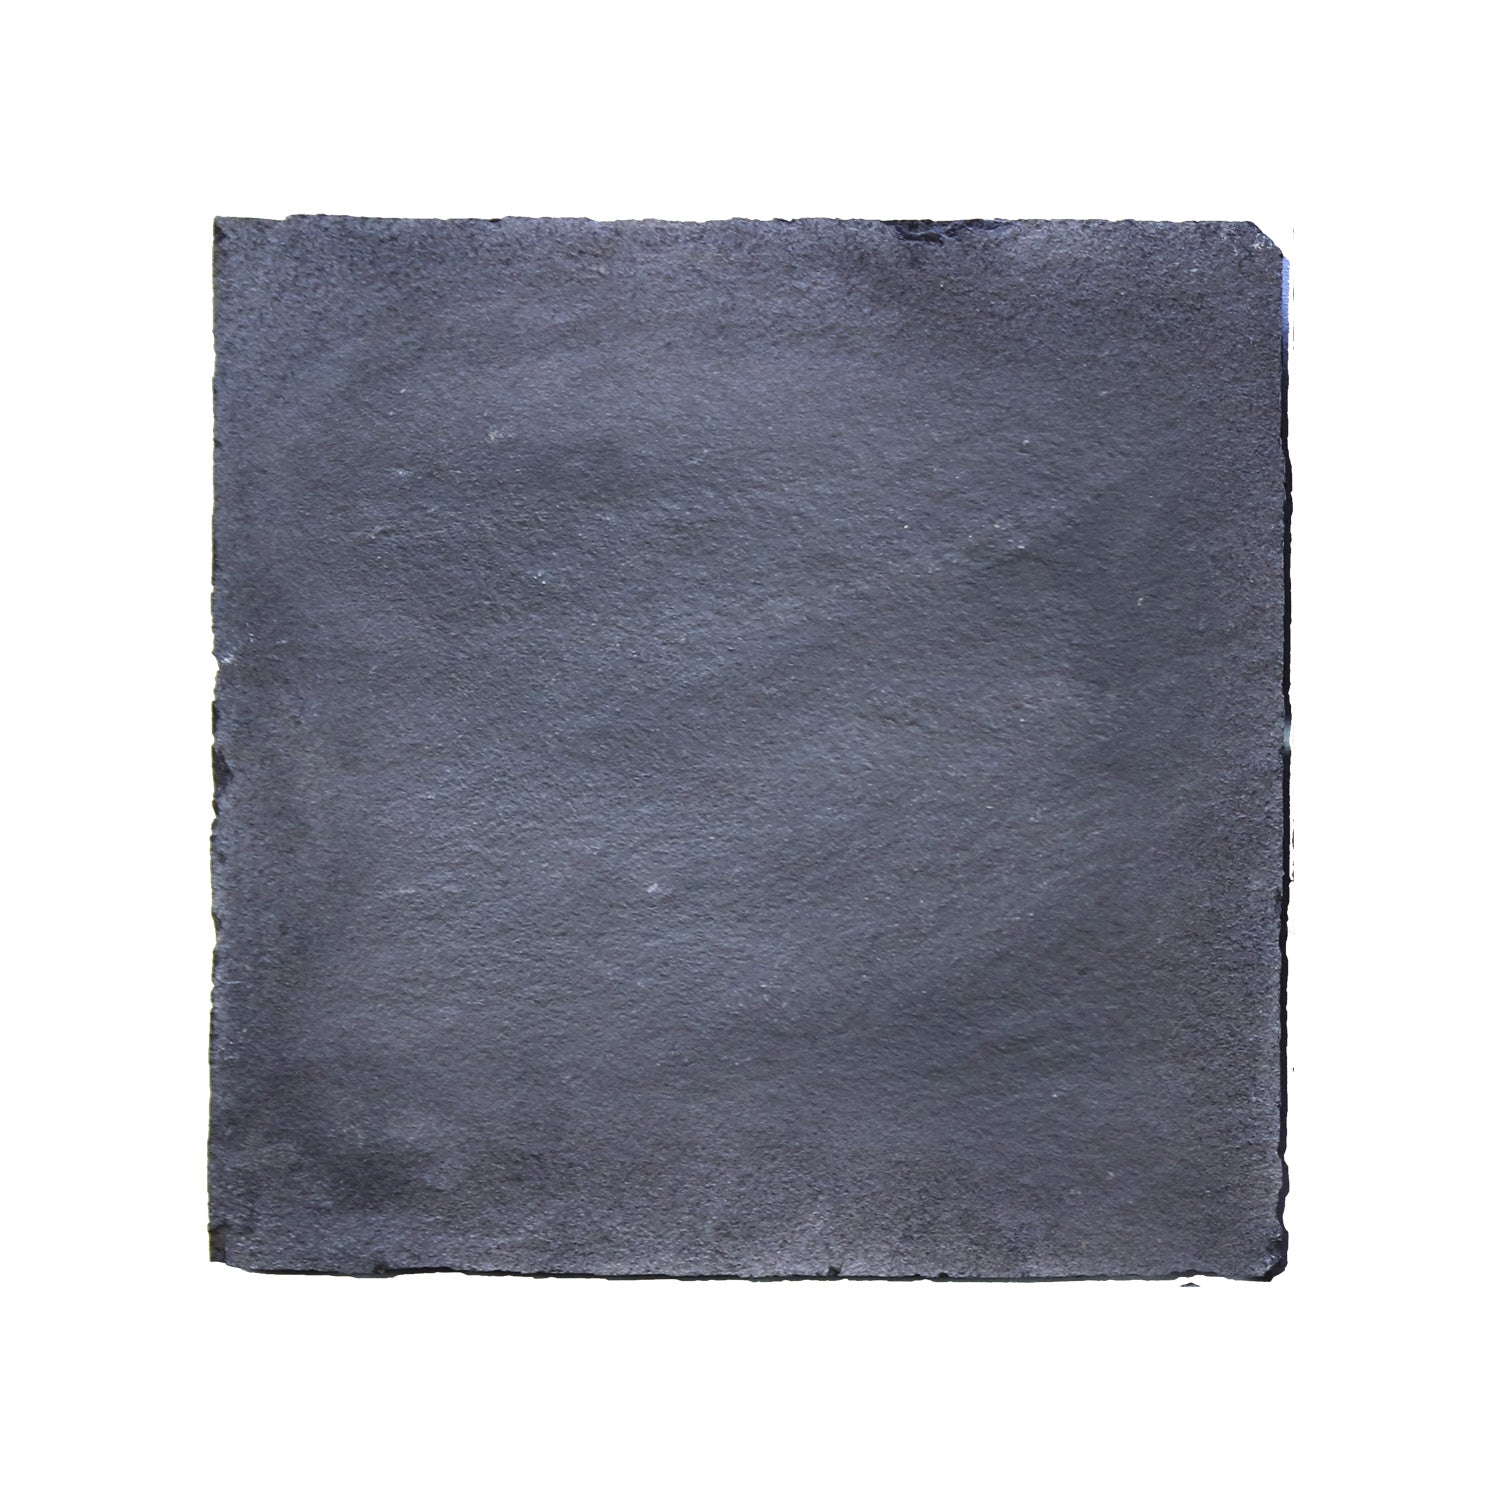 Black Limestone 600mm x 600mm (38pk)